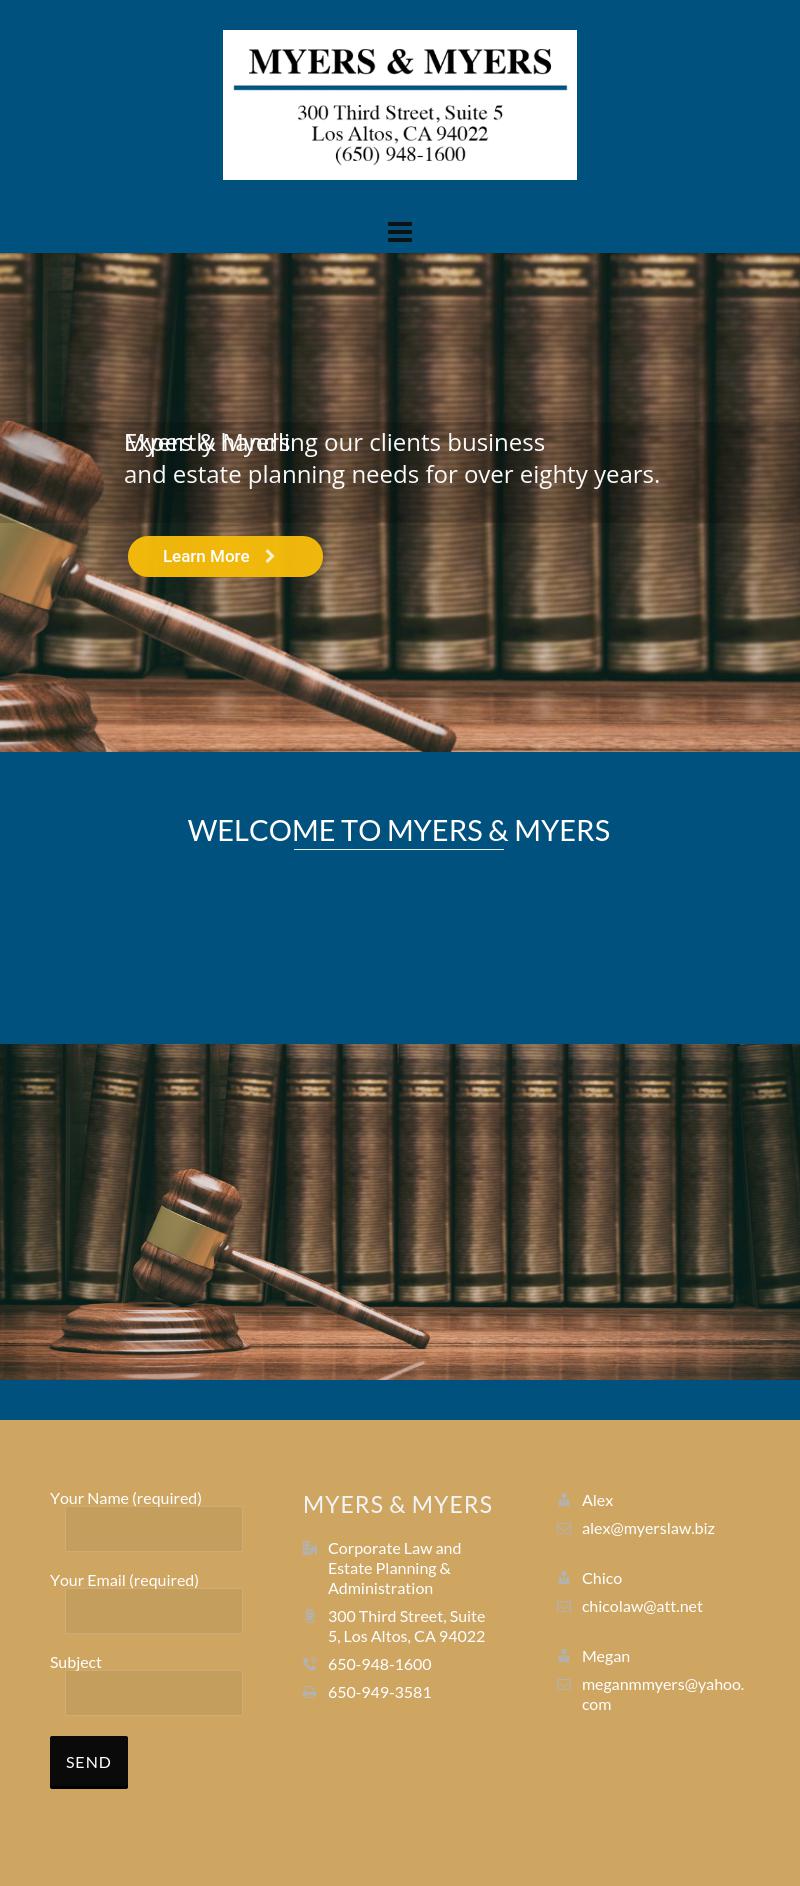 Myers & Myers - Los Altos CA Lawyers